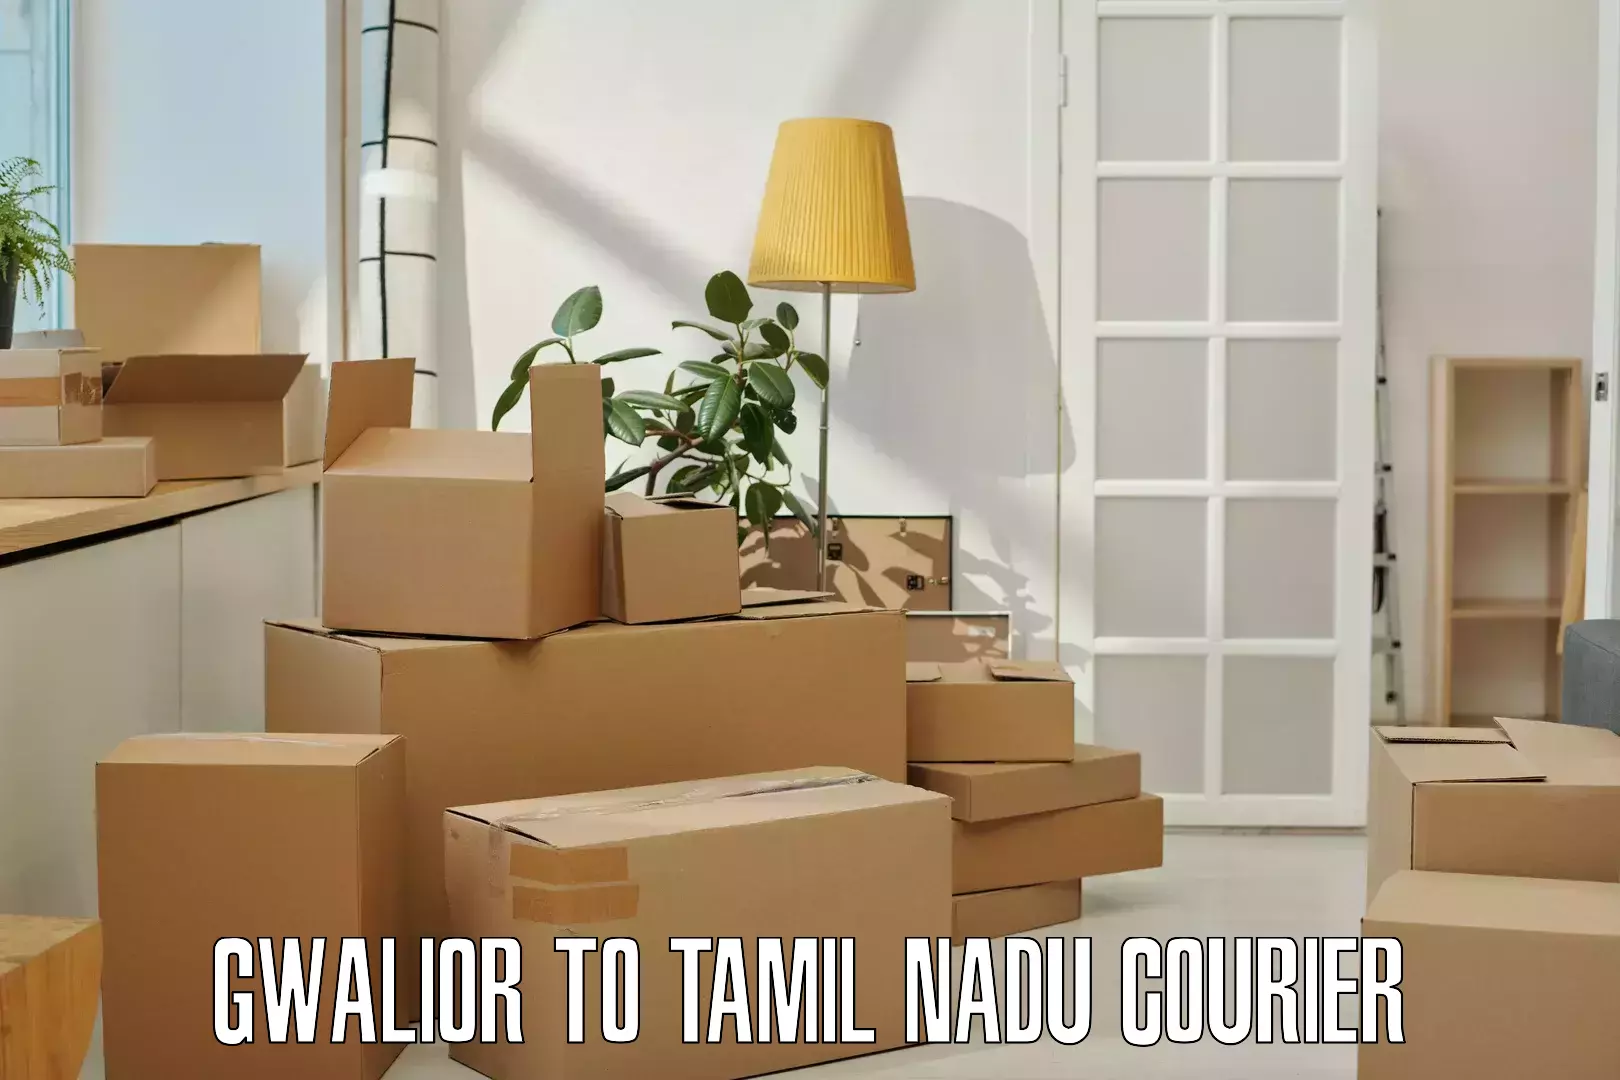 Advanced tracking systems Gwalior to Tamil Nadu